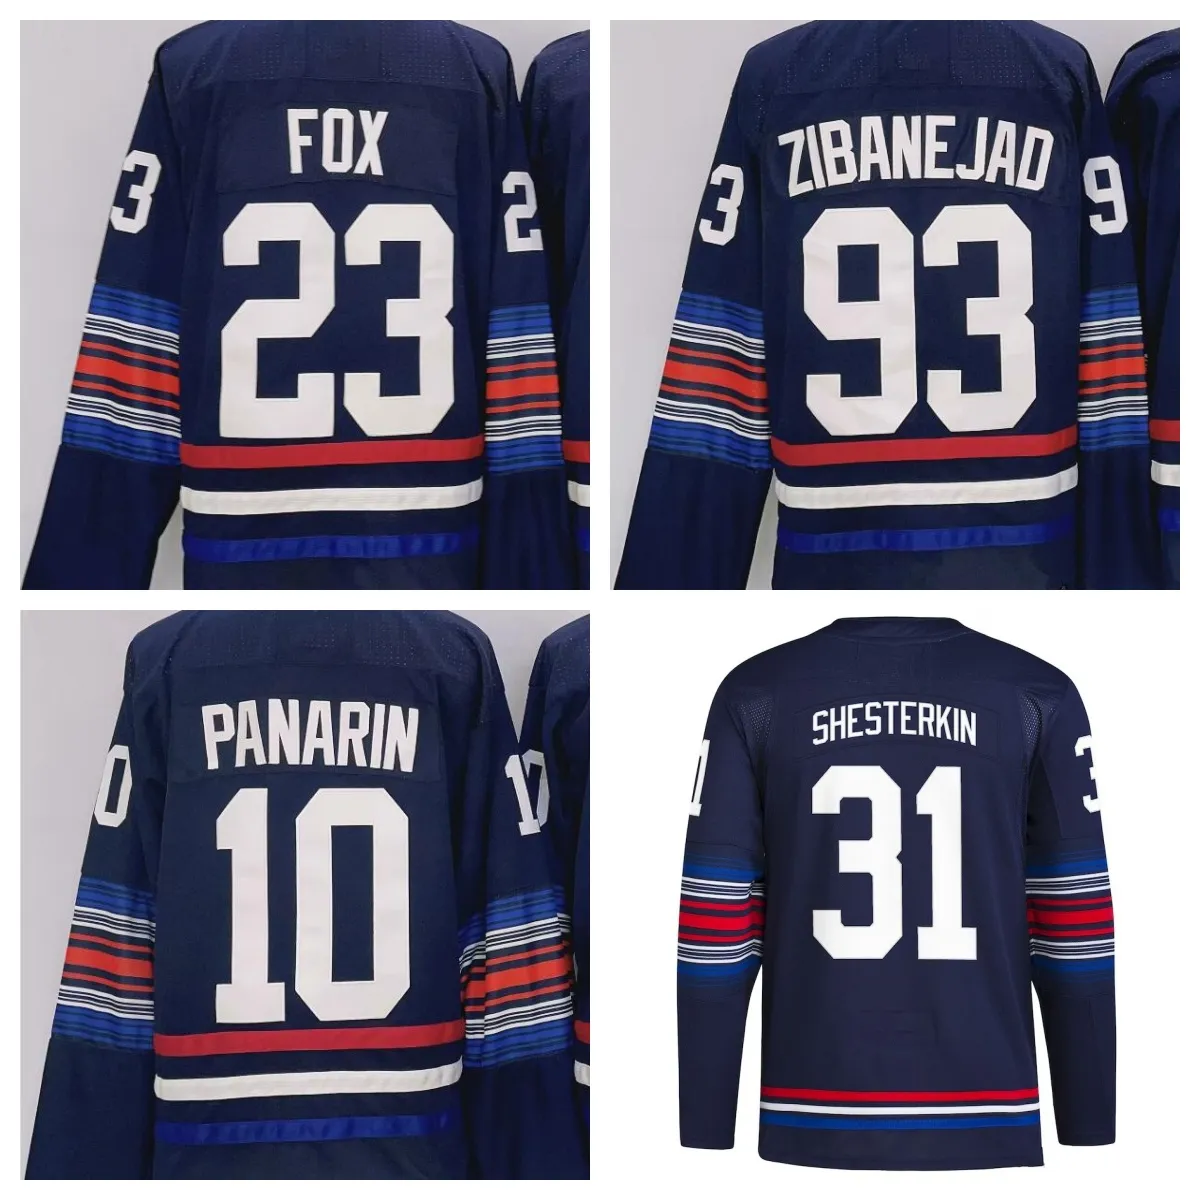 Koszulki hokejowe Panarin 10 Rempe 73 Igor Shesterkin 31 Mika ZibaneJad 93 Adam Fox 23 Truba 8 Navy Alternate S-xxxl Sched Men Jersey